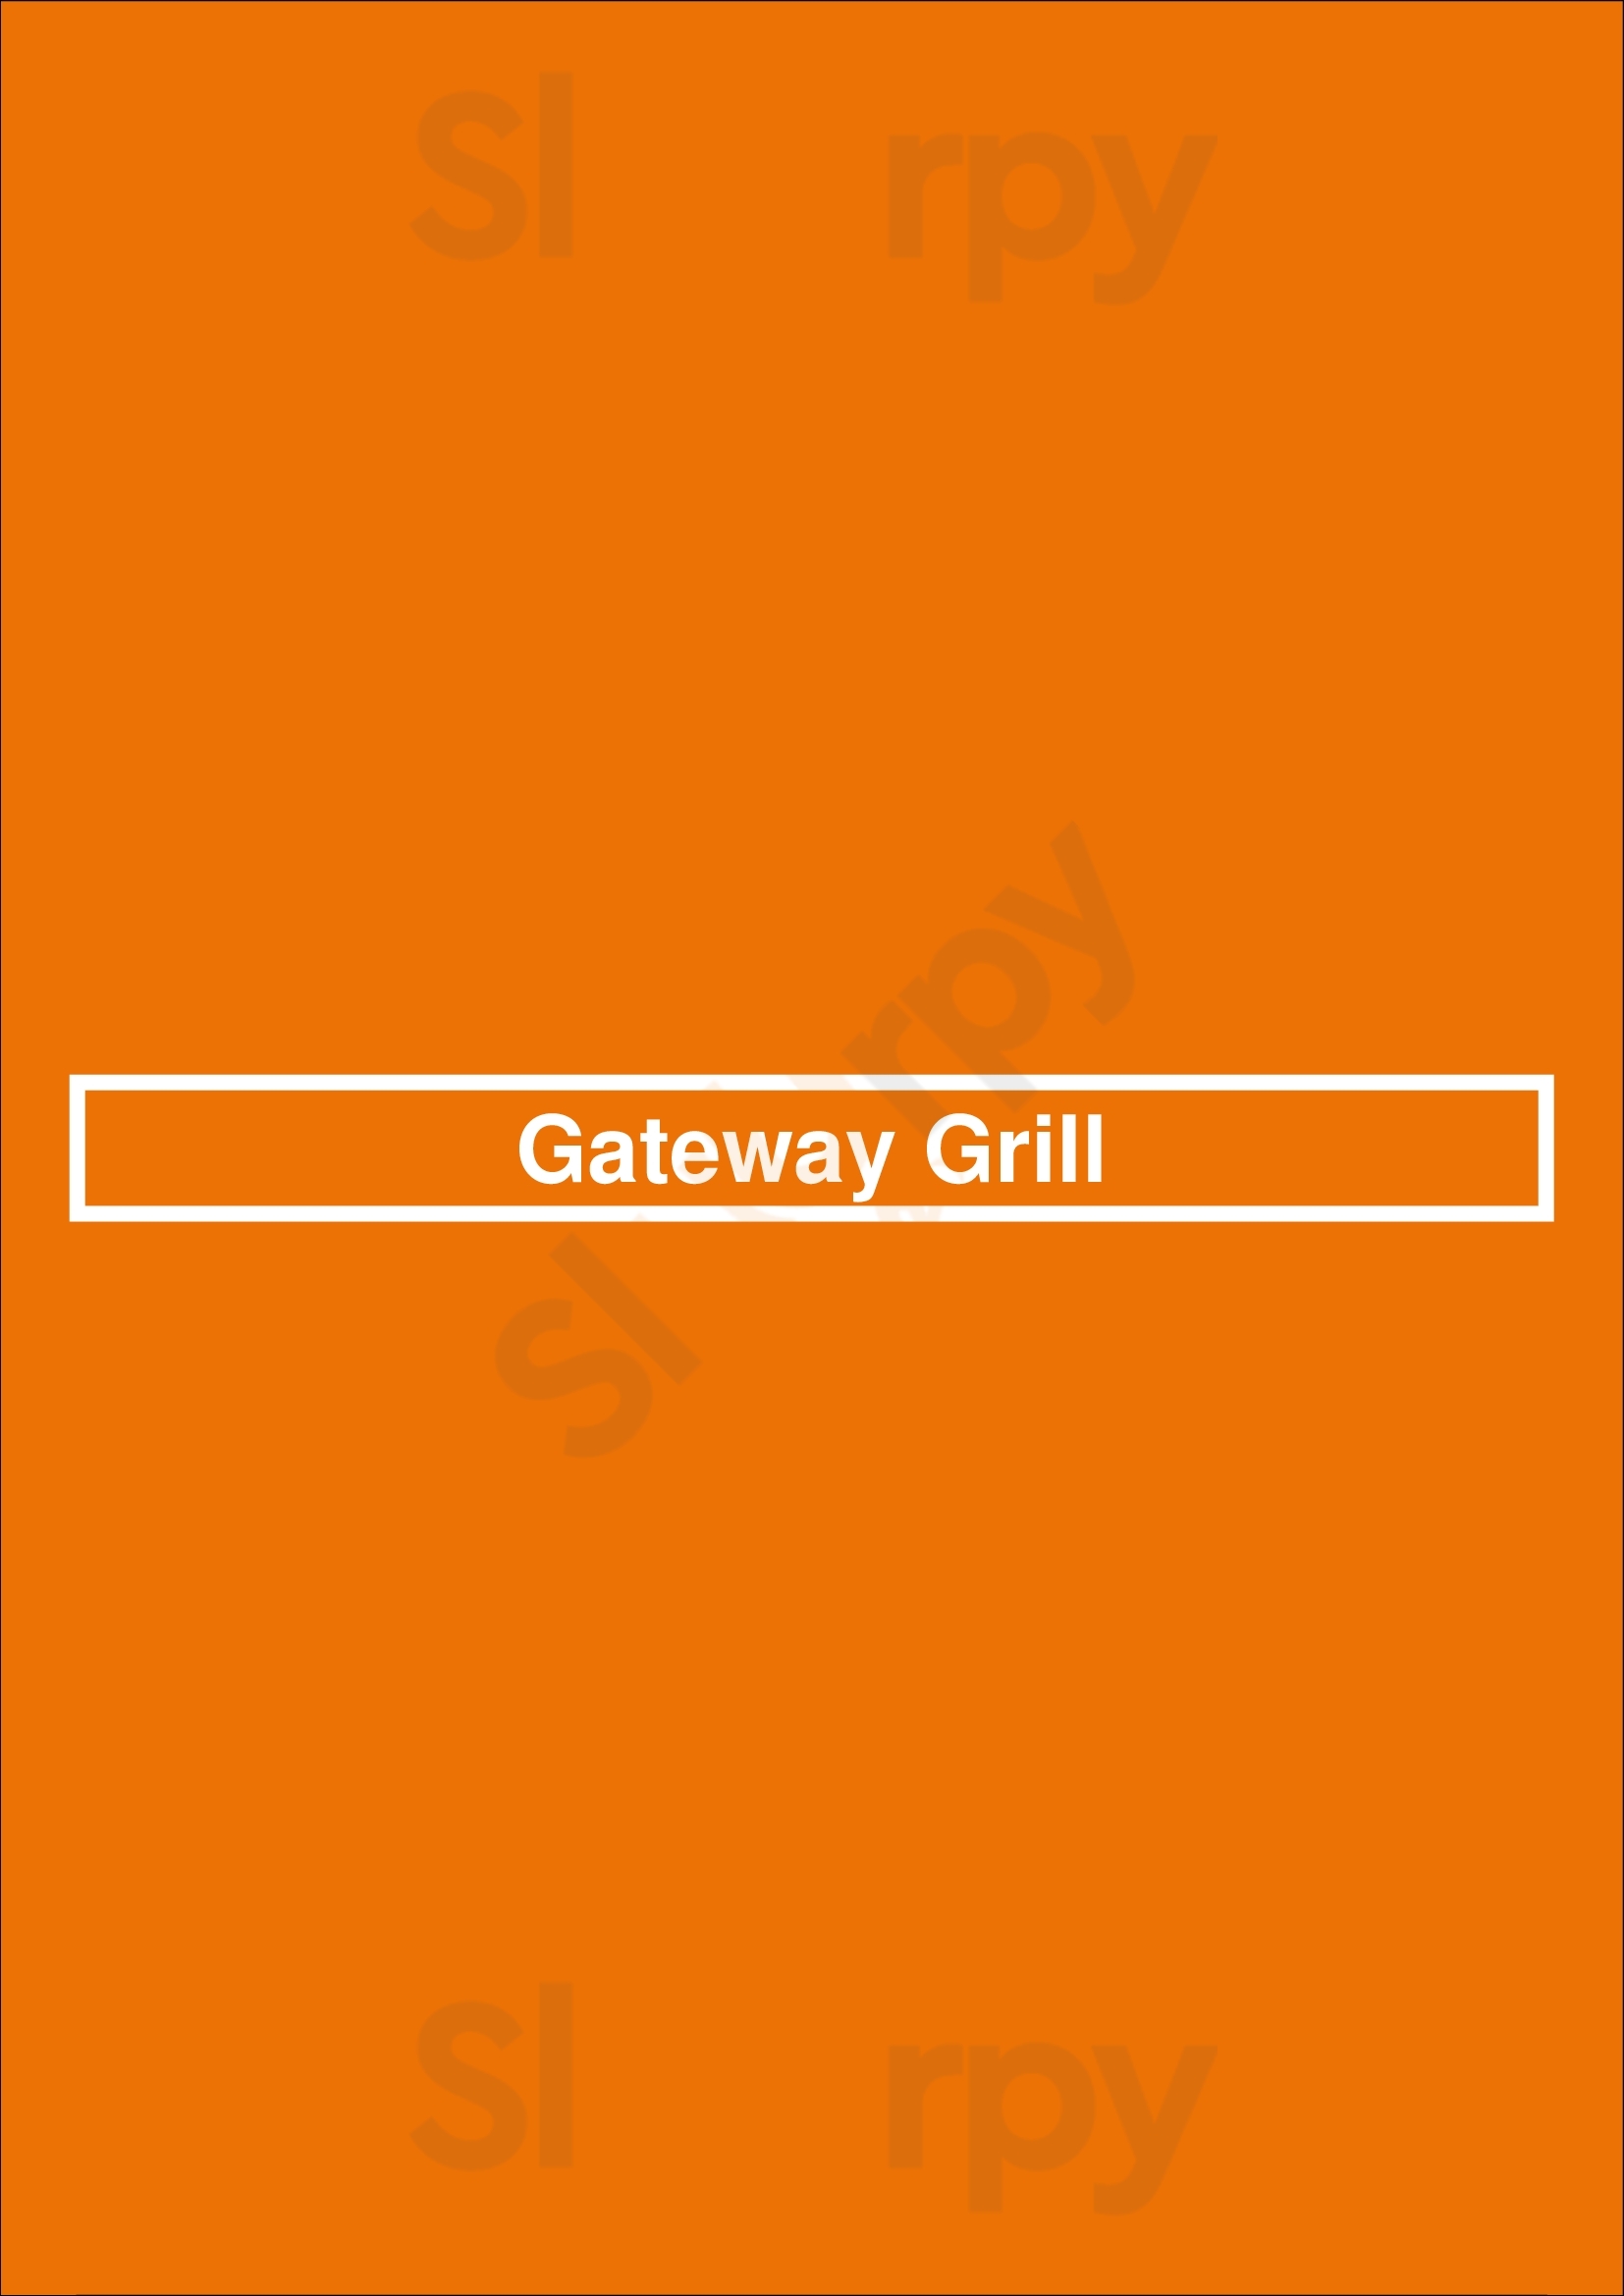 Gateway Grill Monroeville Menu - 1